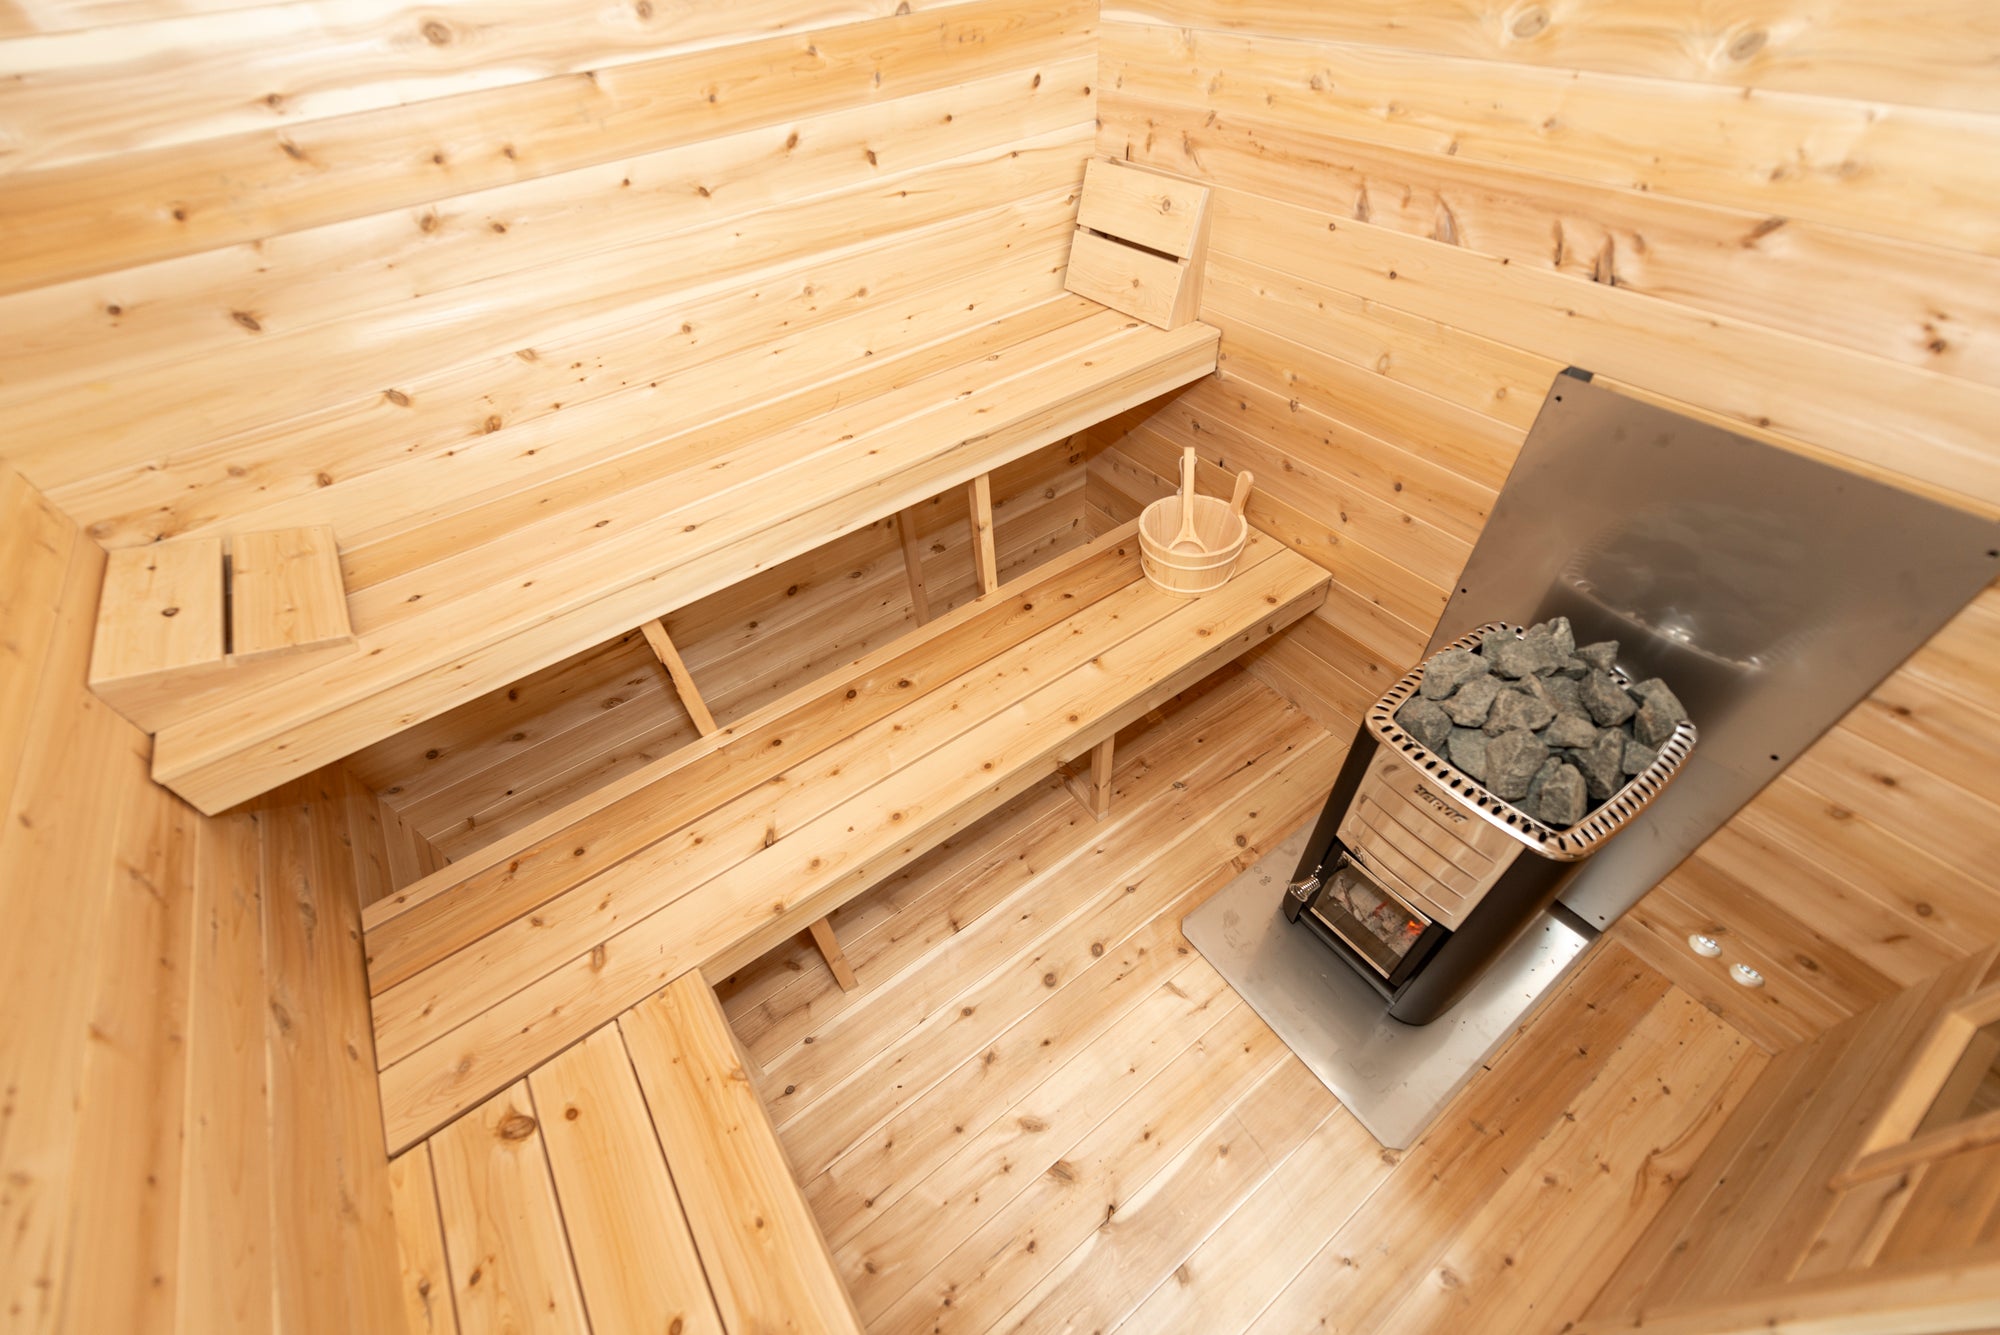 Dundalk Leisurecraft Canadian Timber 6 Person Georgian Cabin Sauna w/ Changeroom | CTC88CW